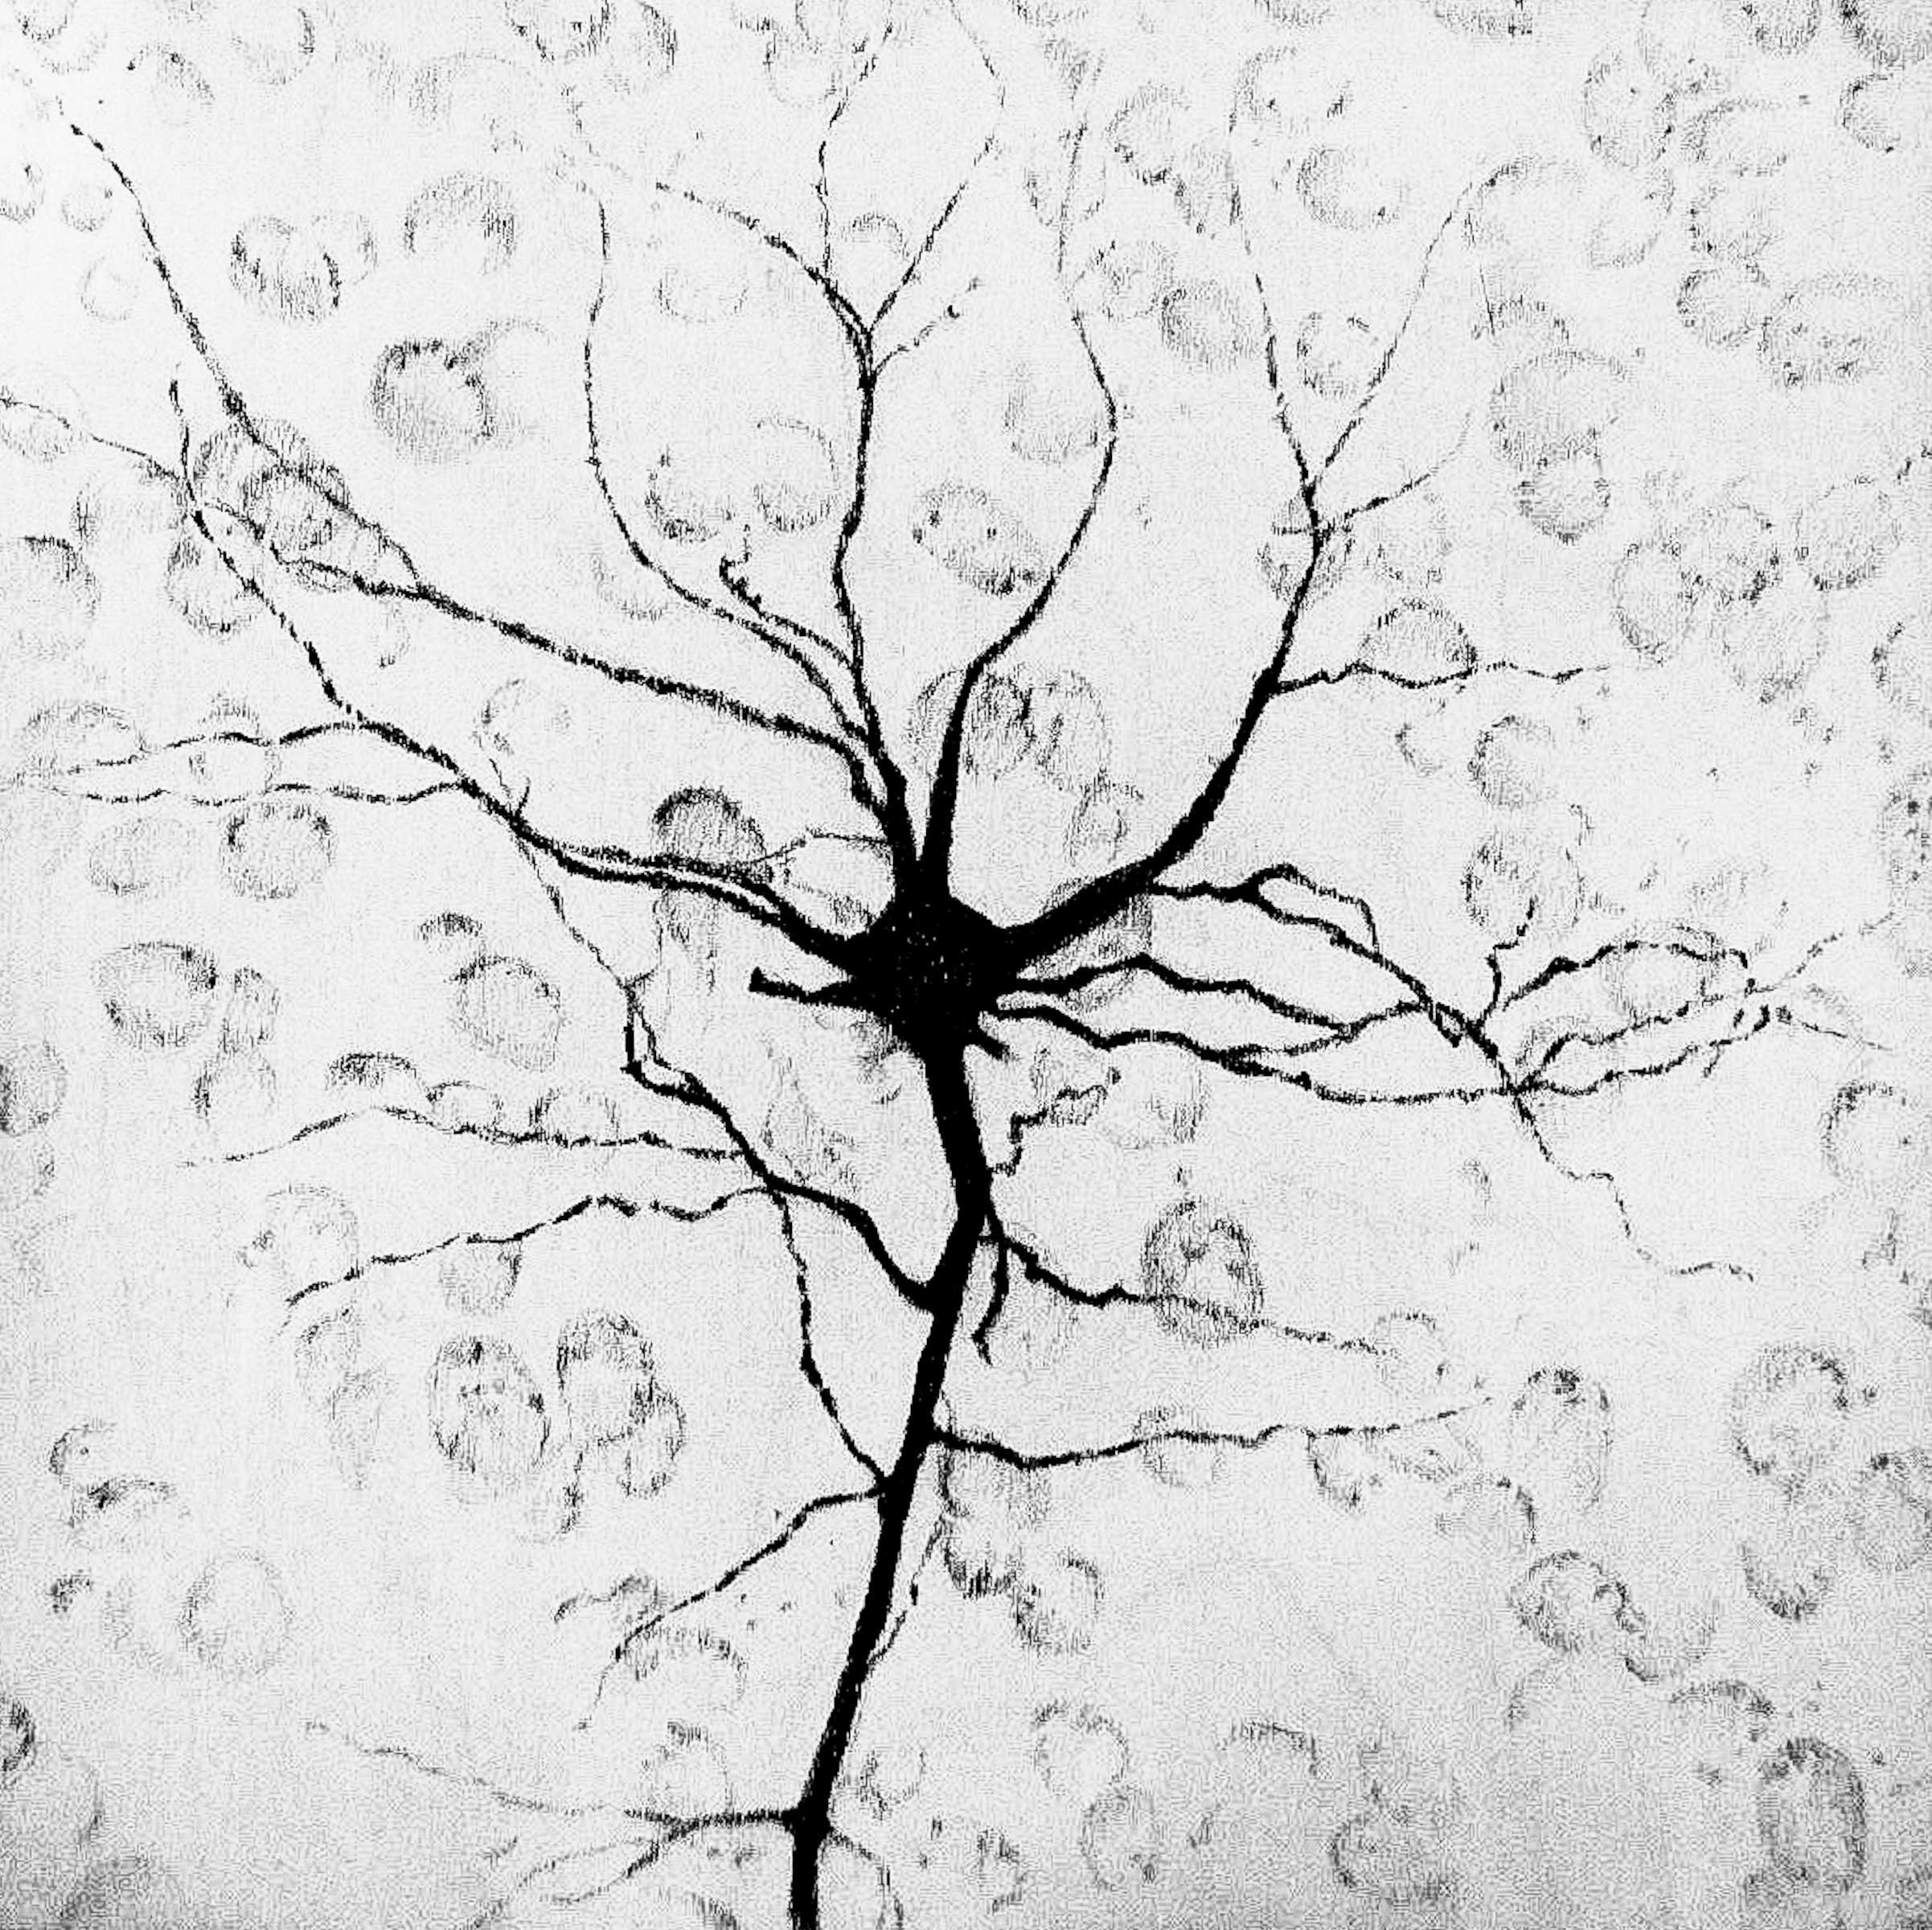 Neuron, Deborah McColl.